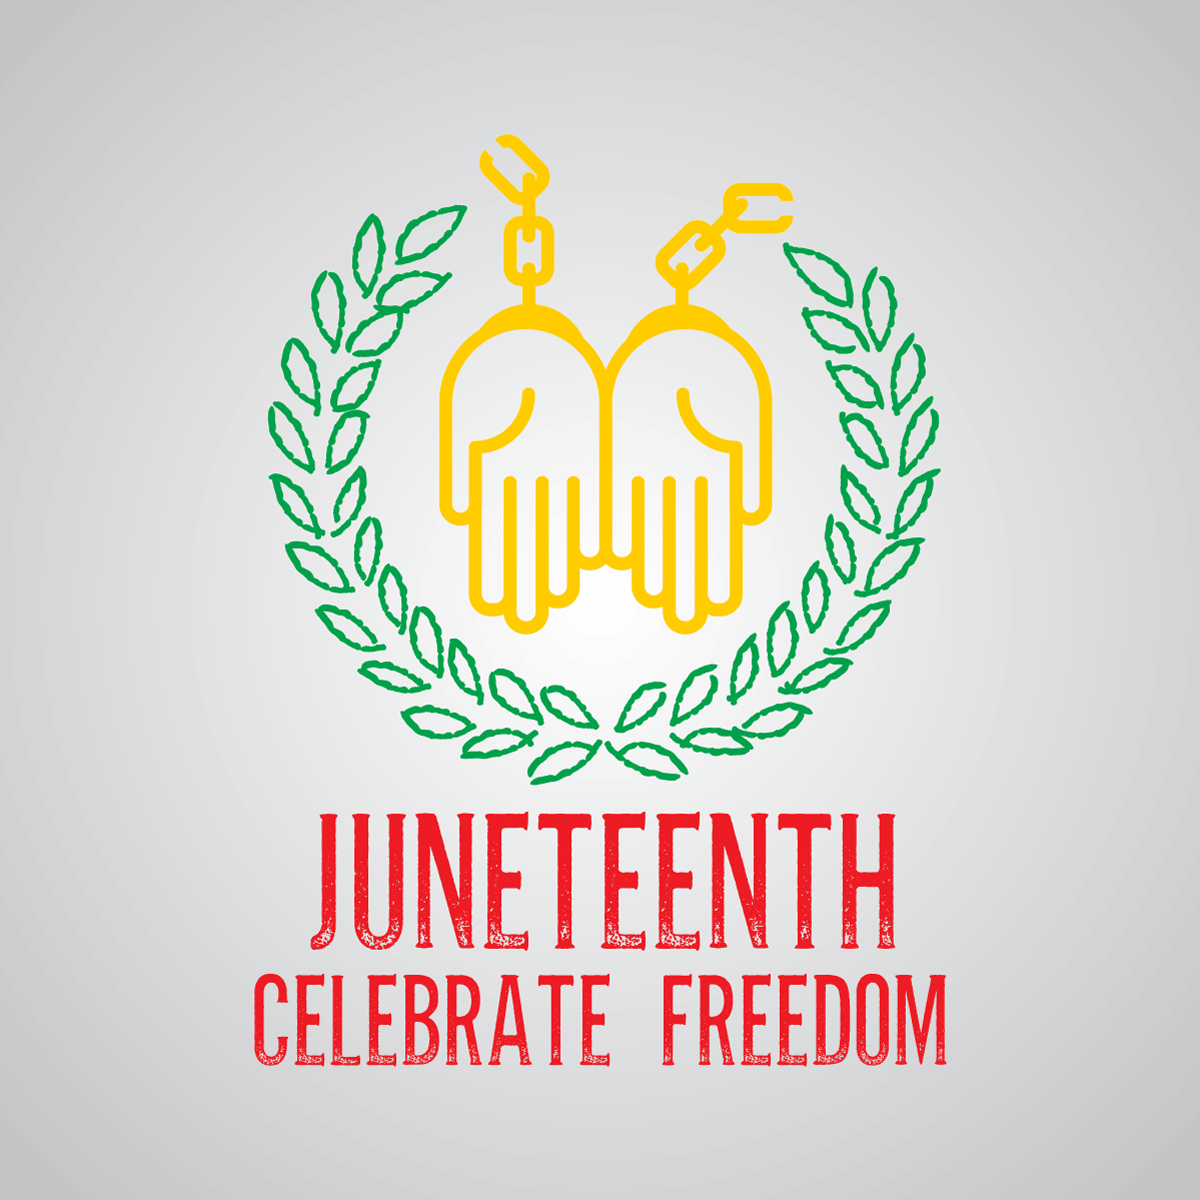 Juneteenth Celebrate Freedom Graphic Image